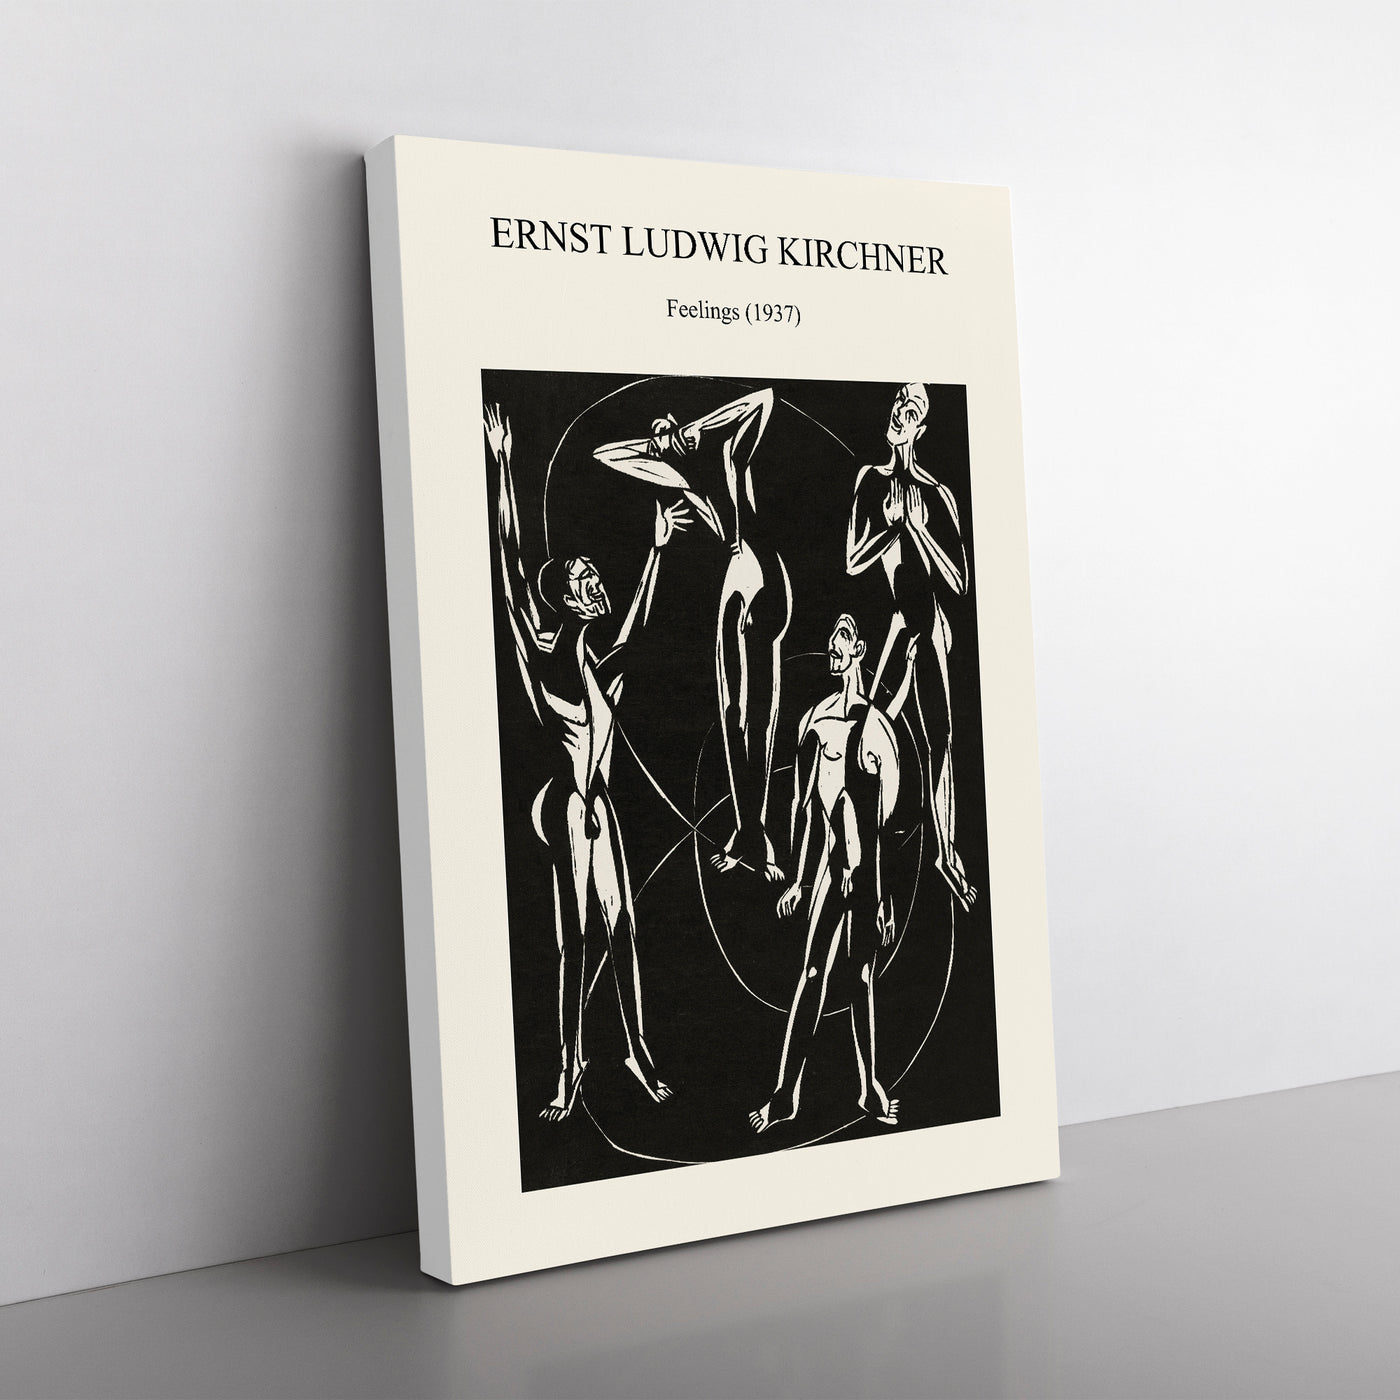 Feelings Print By Ernst Ludwig Kirchner